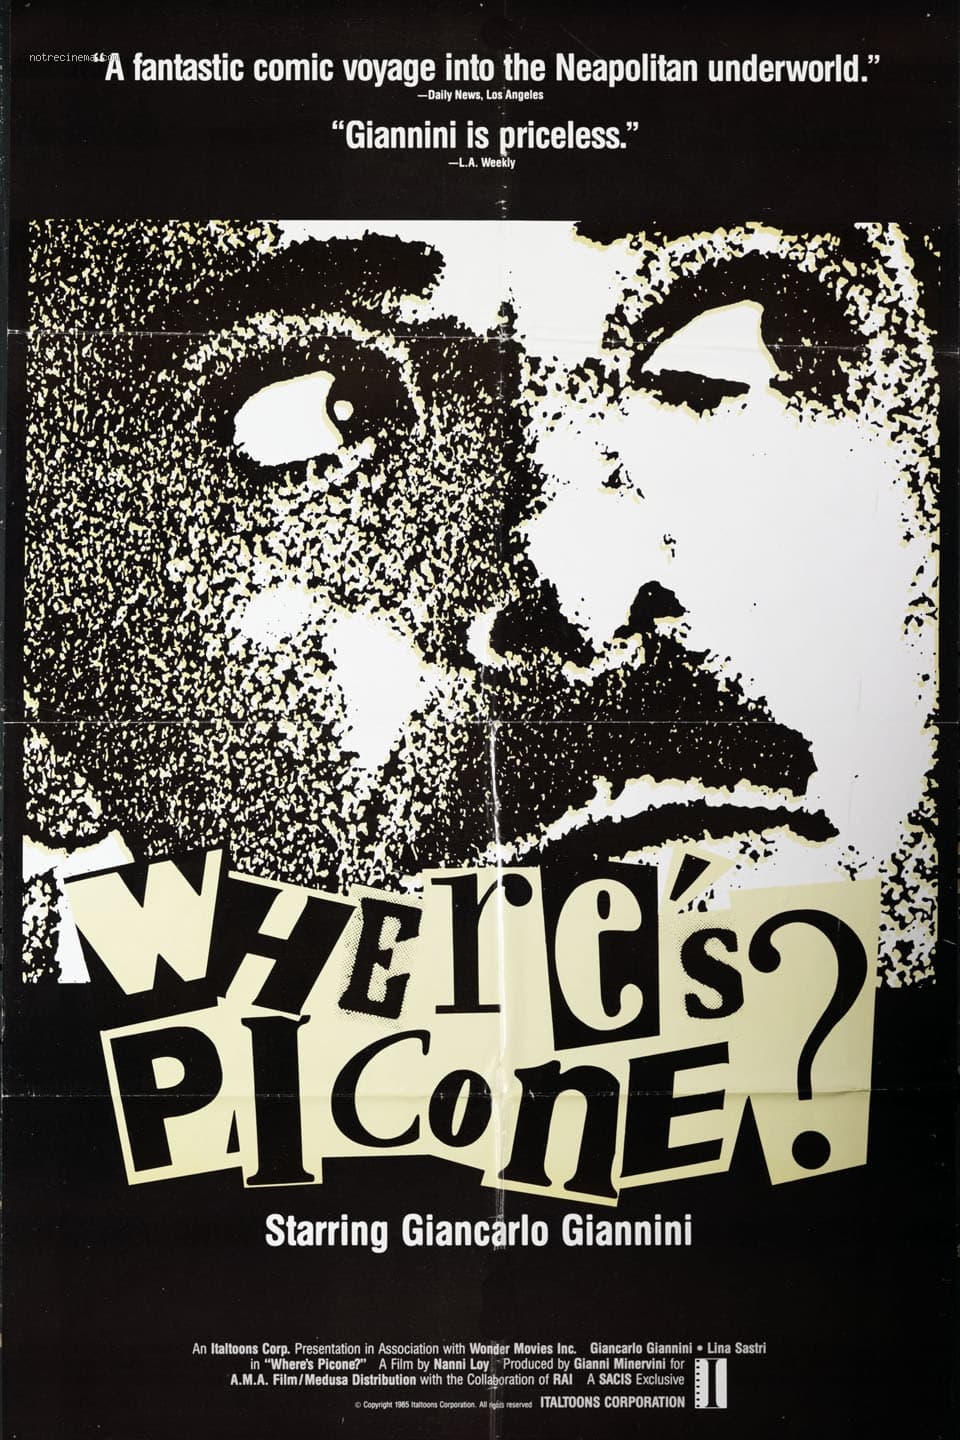 Mi manda Picone (1984)